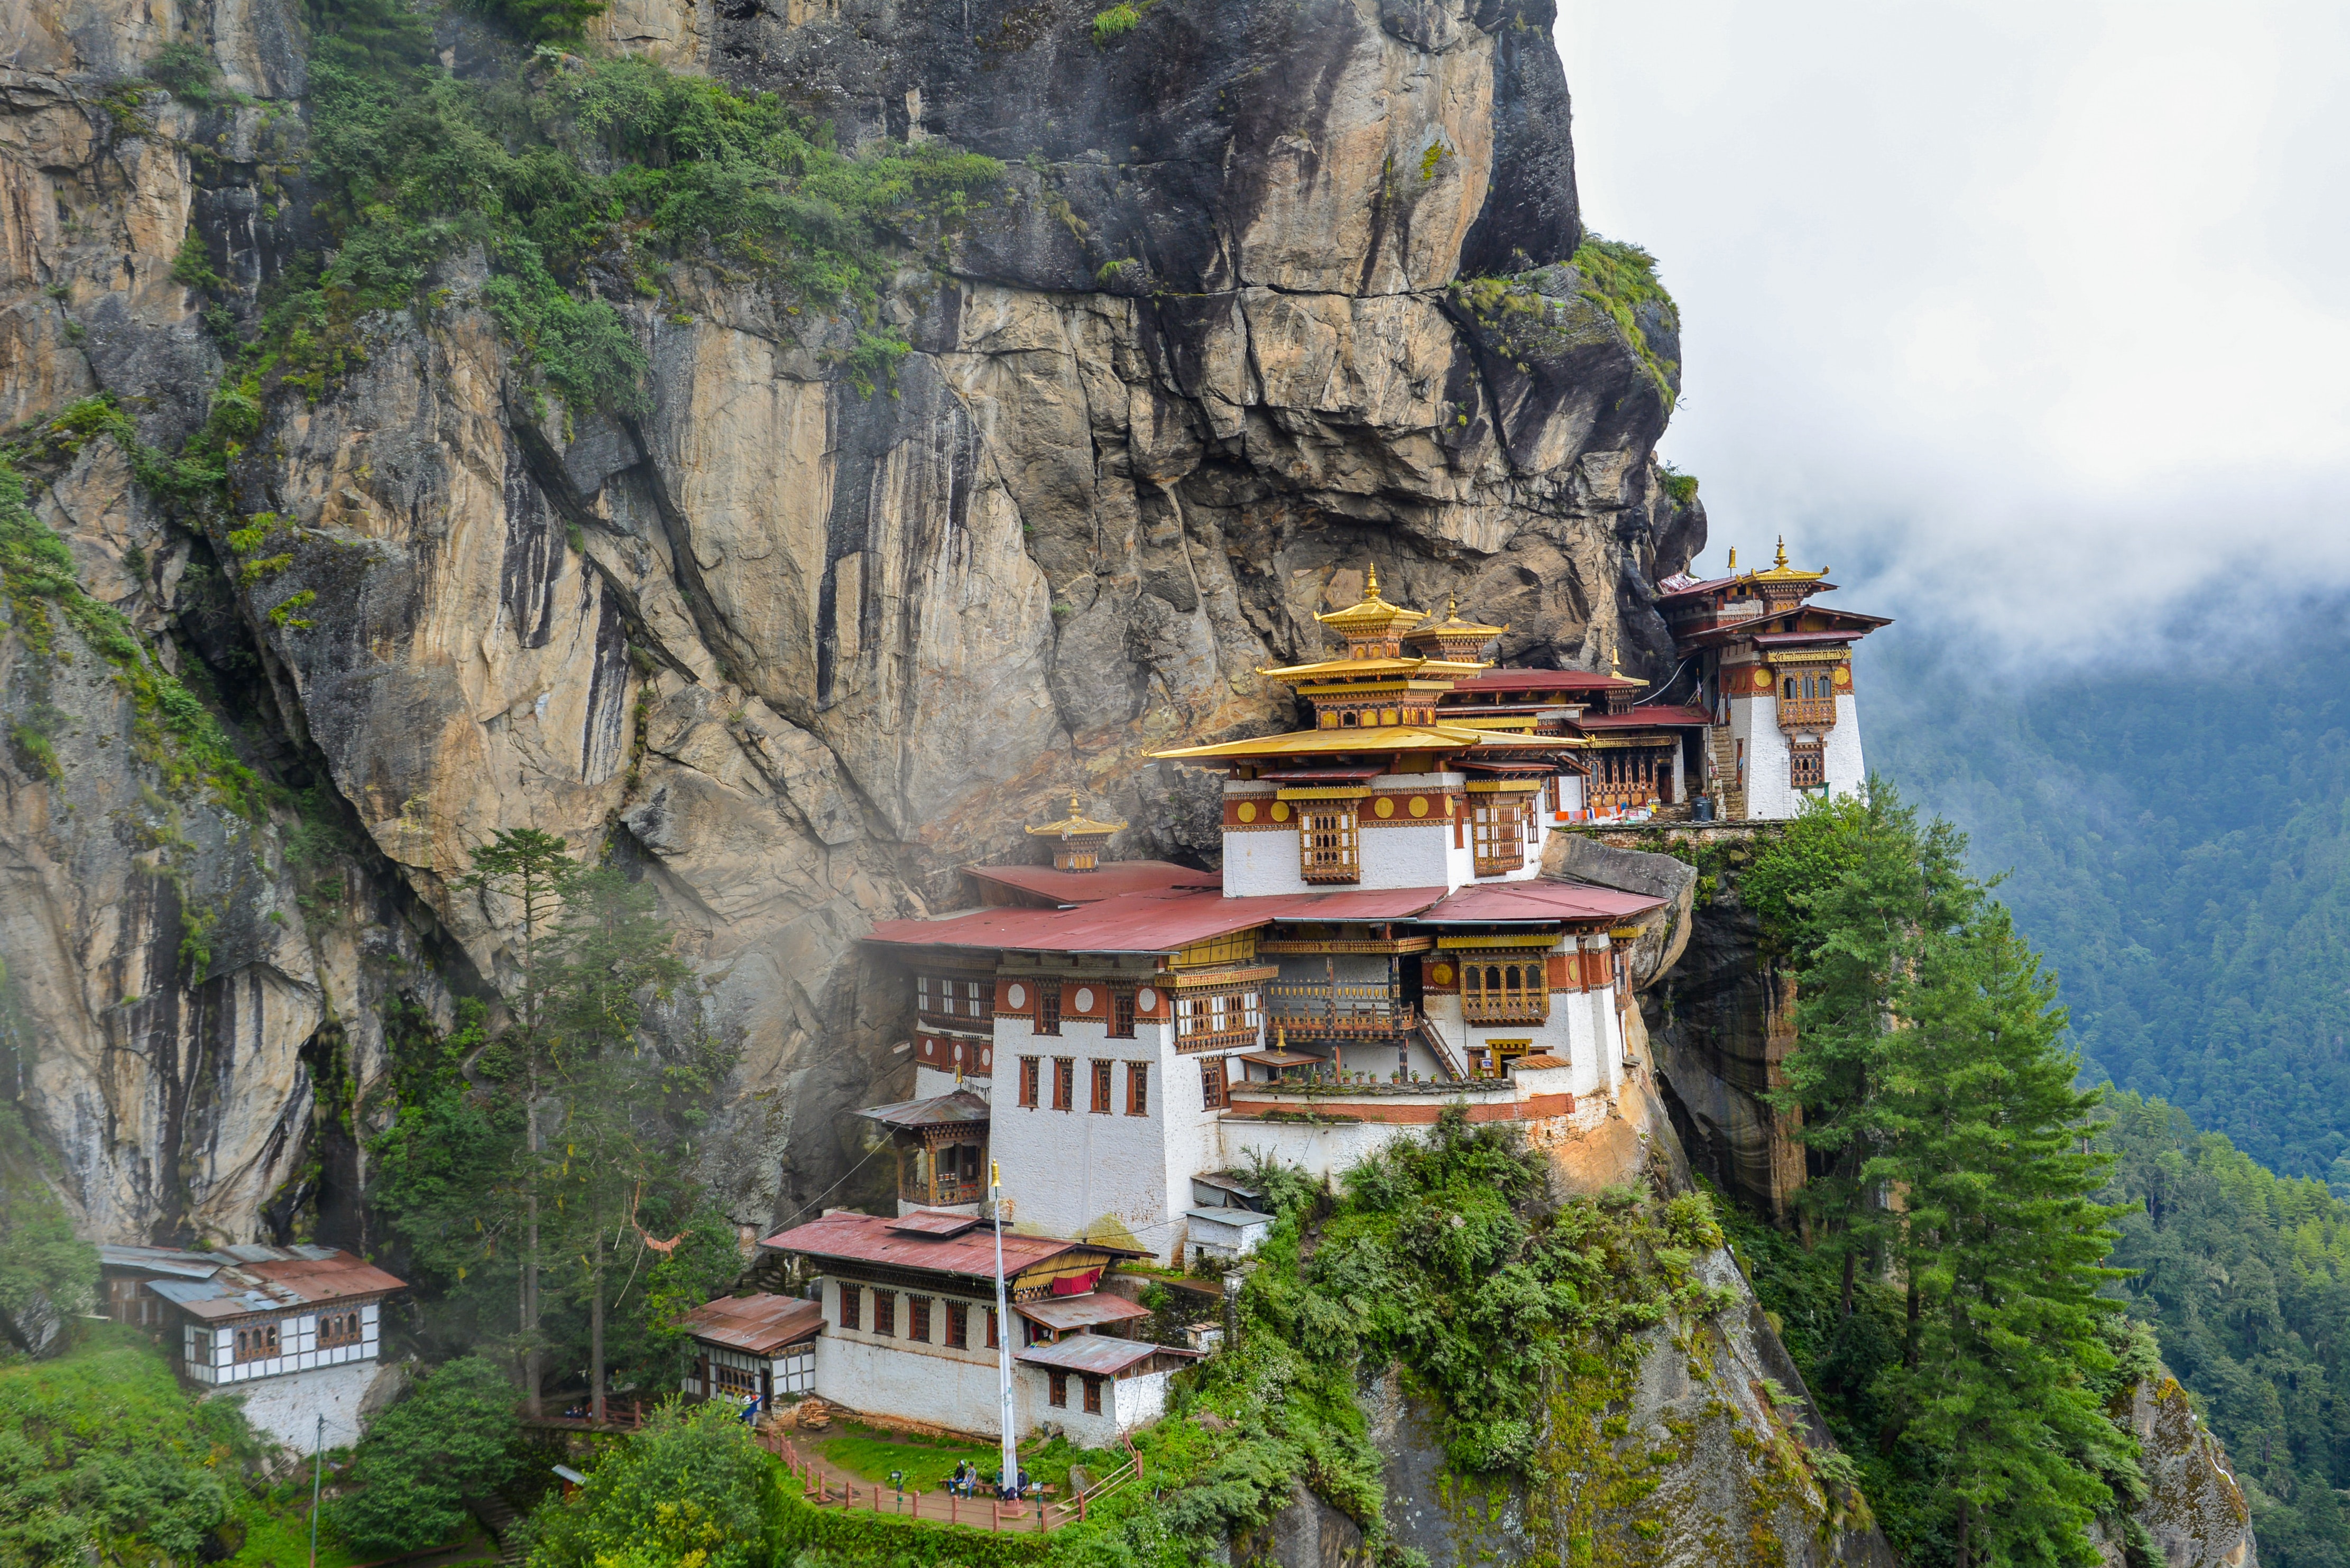 Hilltop temple at Paro, Kingdom of Bhutan